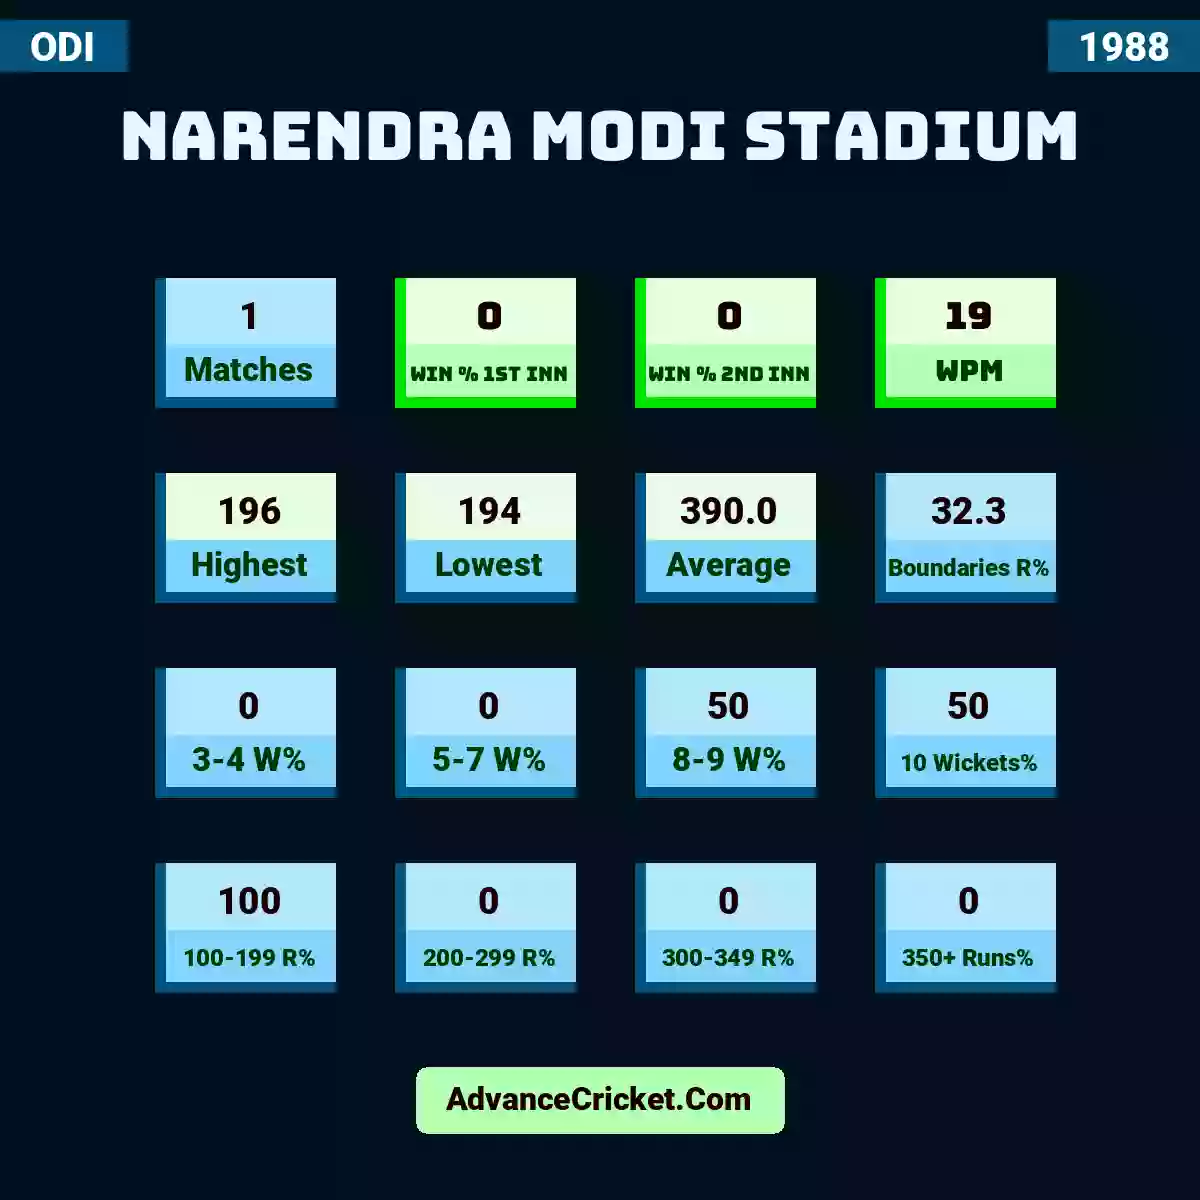 Image showing Narendra Modi Stadium with Matches: 1, Win % 1st Inn: 0, Win % 2nd Inn: 0, WPM: 19, Highest: 196, Lowest: 194, Average: 390.0, Boundaries R%: 32.3, 3-4 W%: 0, 5-7 W%: 0, 8-9 W%: 50, 10 Wickets%: 50, 100-199 R%: 100, 200-299 R%: 0, 300-349 R%: 0, 350+ Runs%: 0.